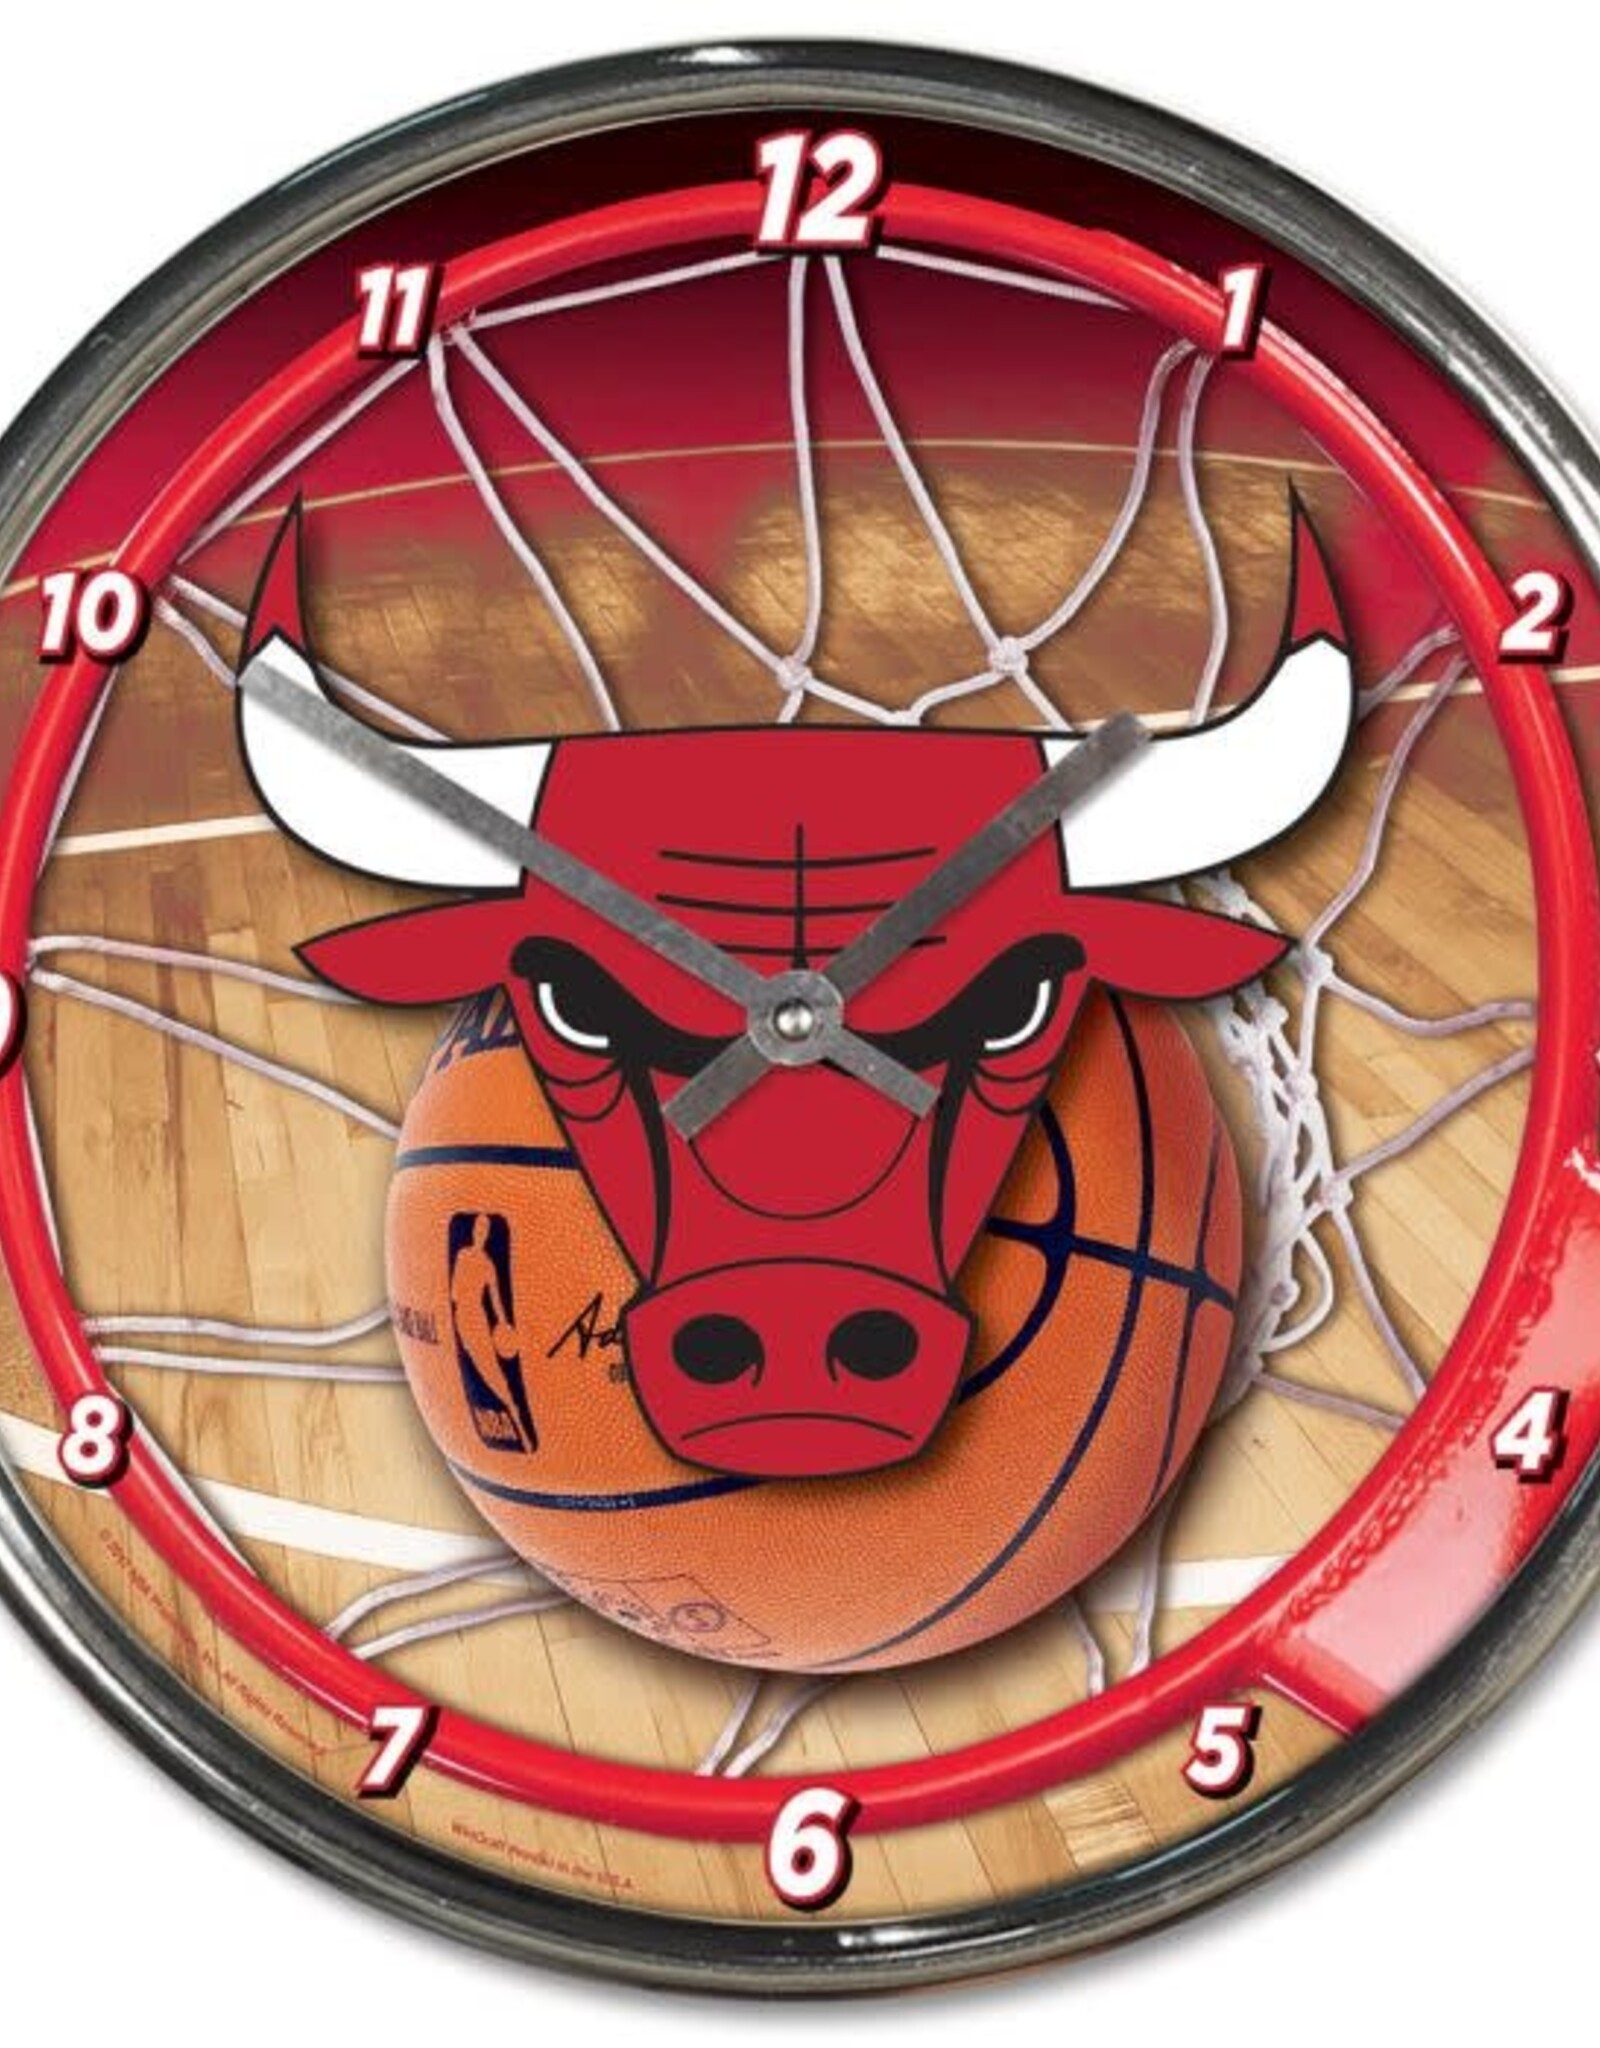 WINCRAFT Chicago Bulls Round Chrome Clock